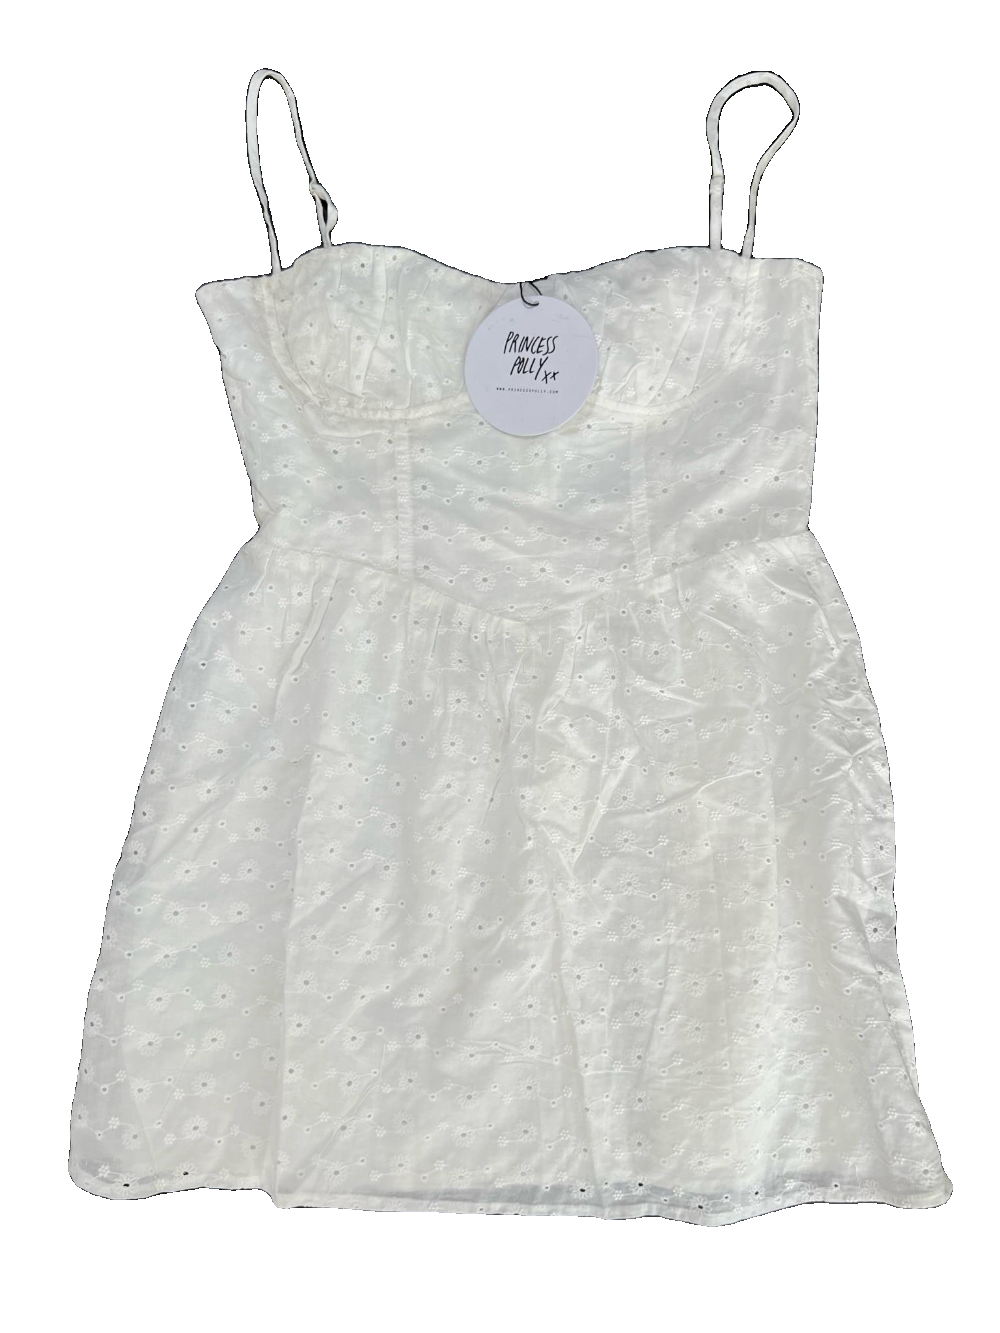 Princess Polly- White "Mckilah" Mini Dress NEW WITH TAGS